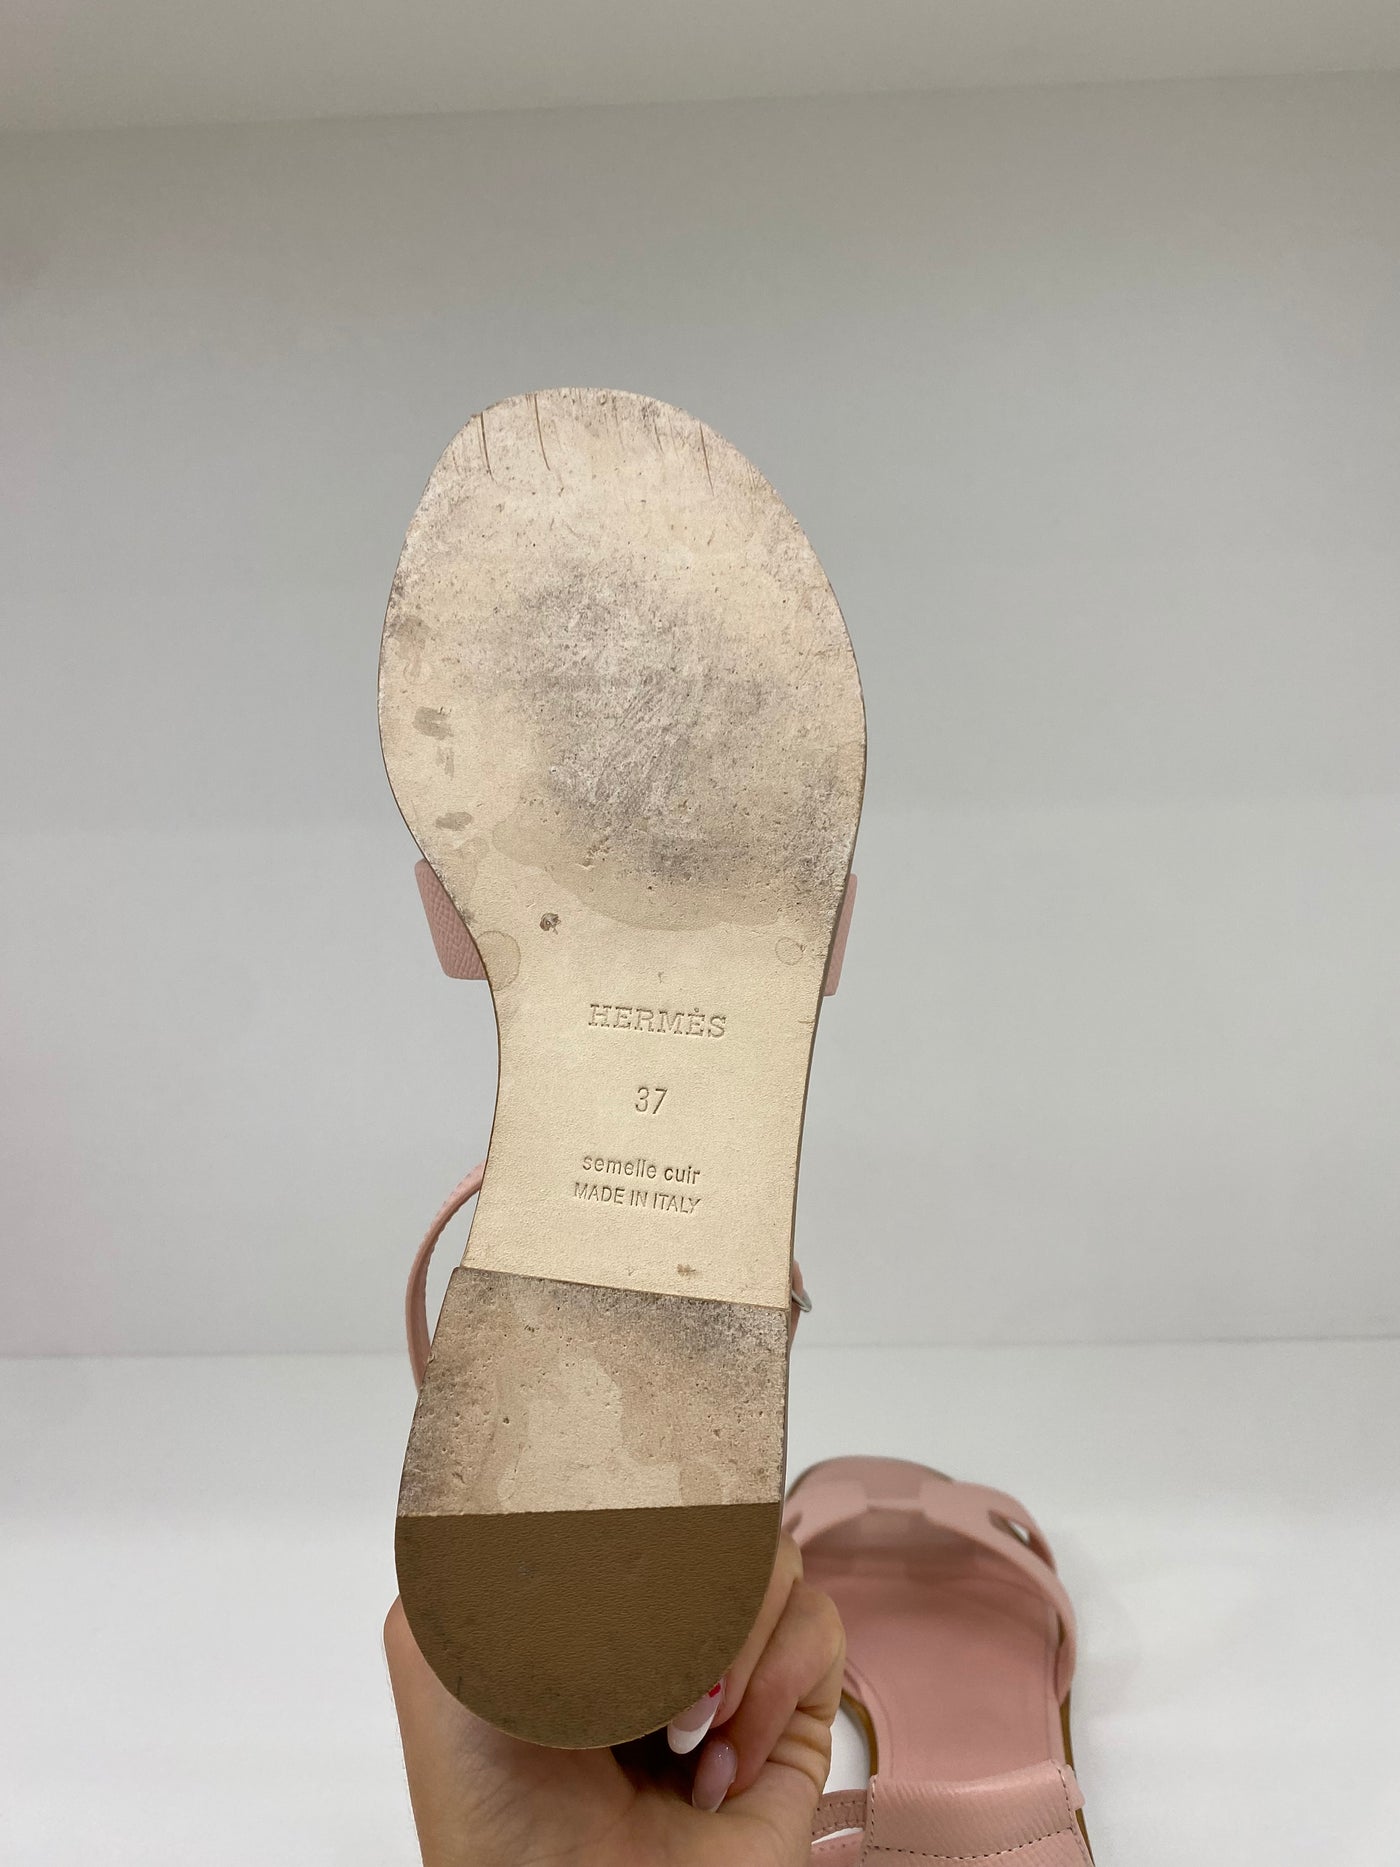 Hermes Santorini Sandal Pink Size 37